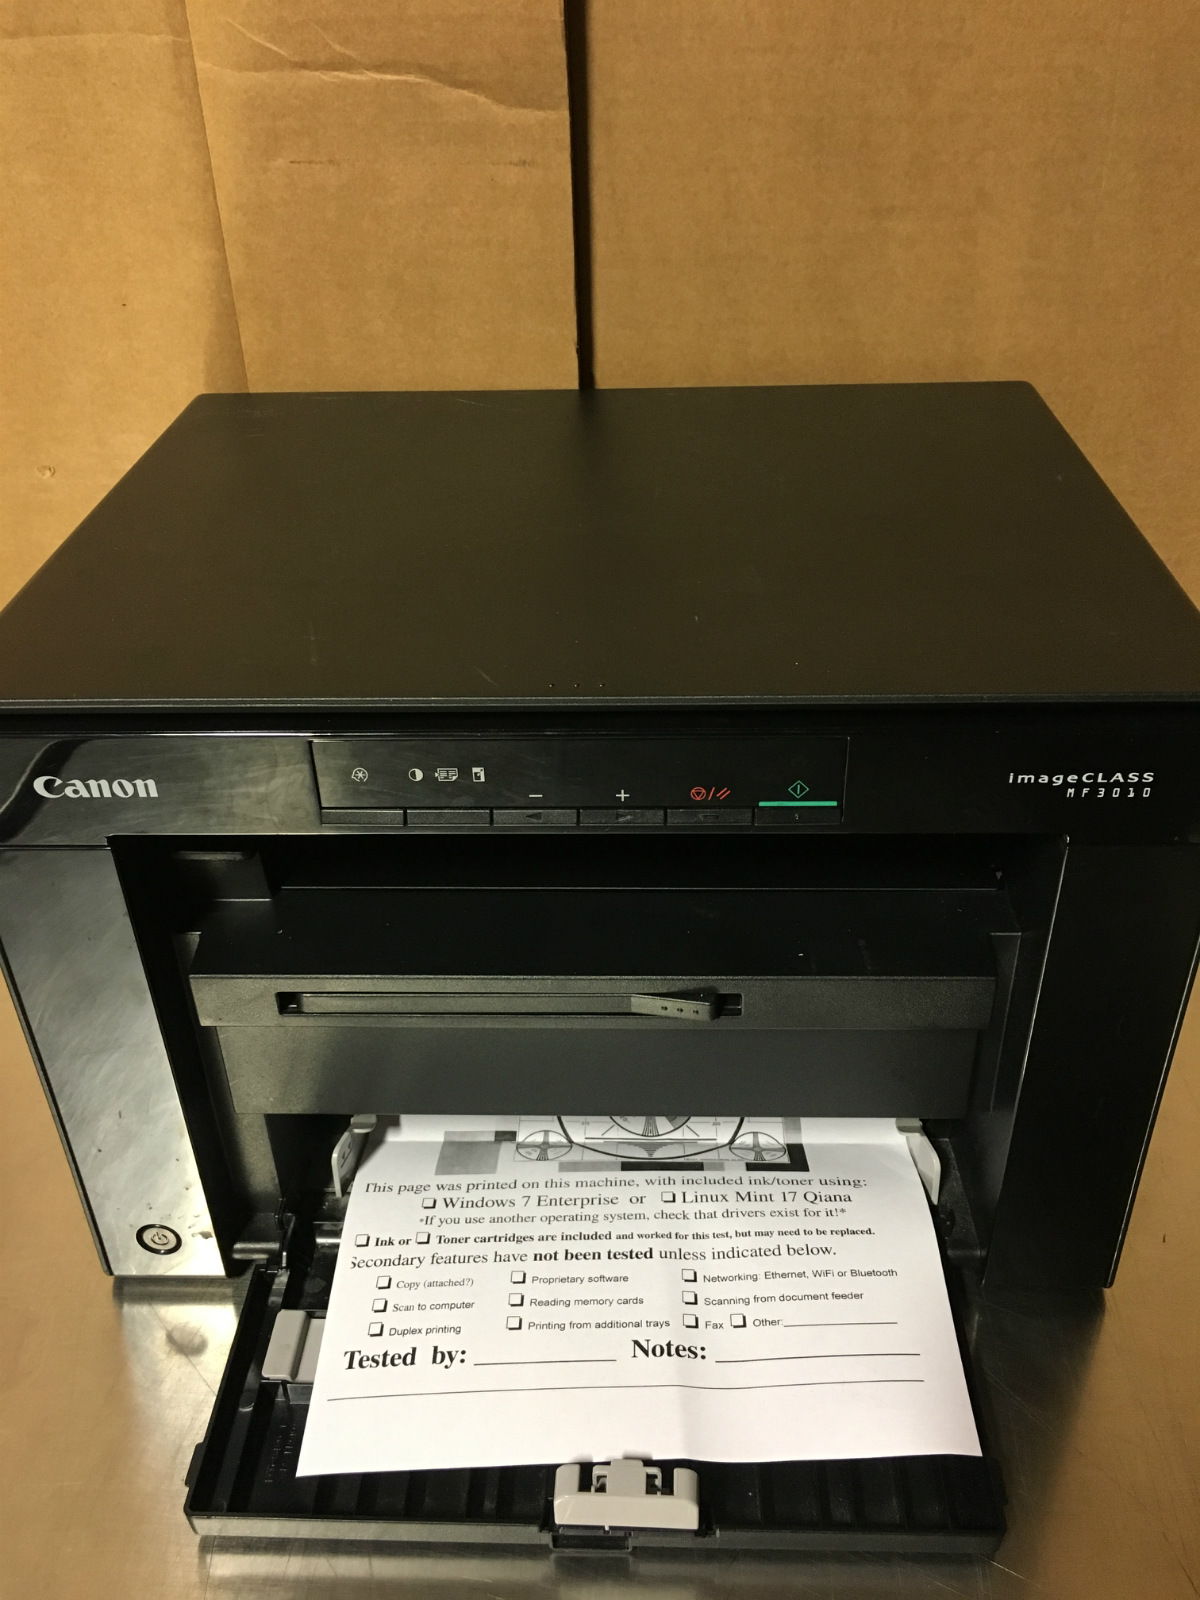 CANON ImageCLASS MF3010 All-in-One printer/Scanner complete! | eBay